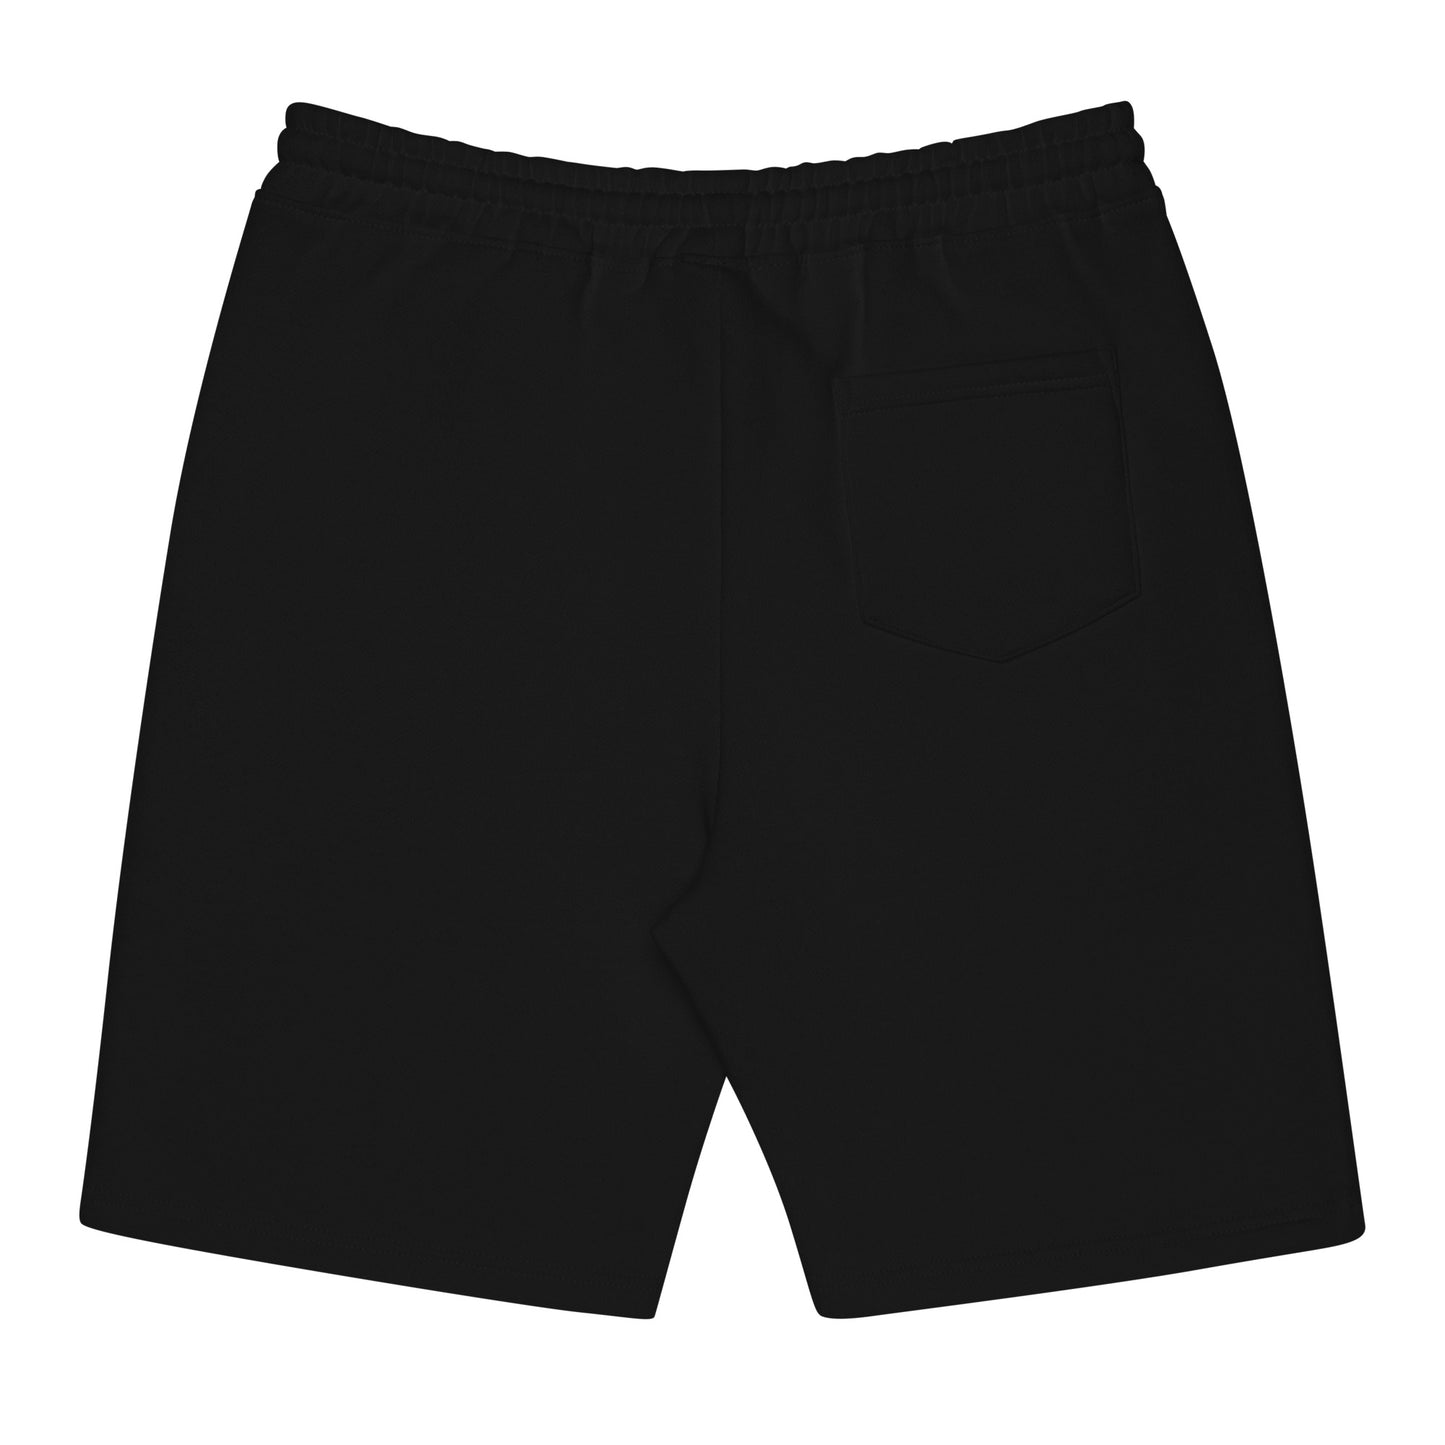 Make money Men's shorts